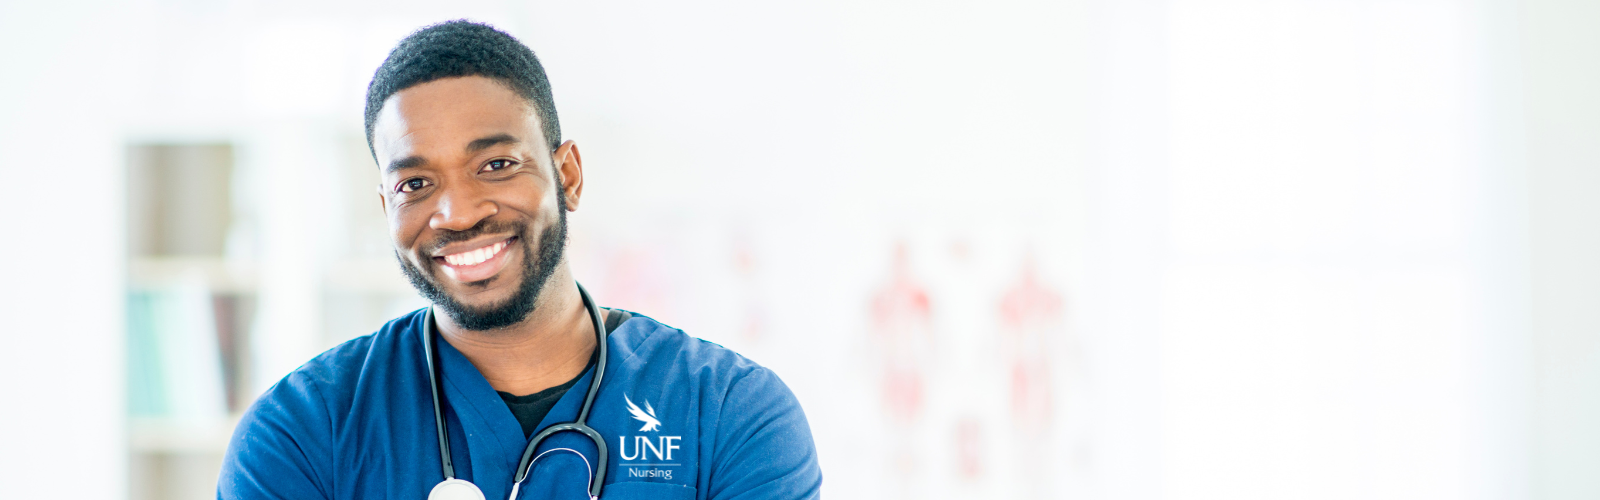 male nurse smiling wearing a blue UNF scrub